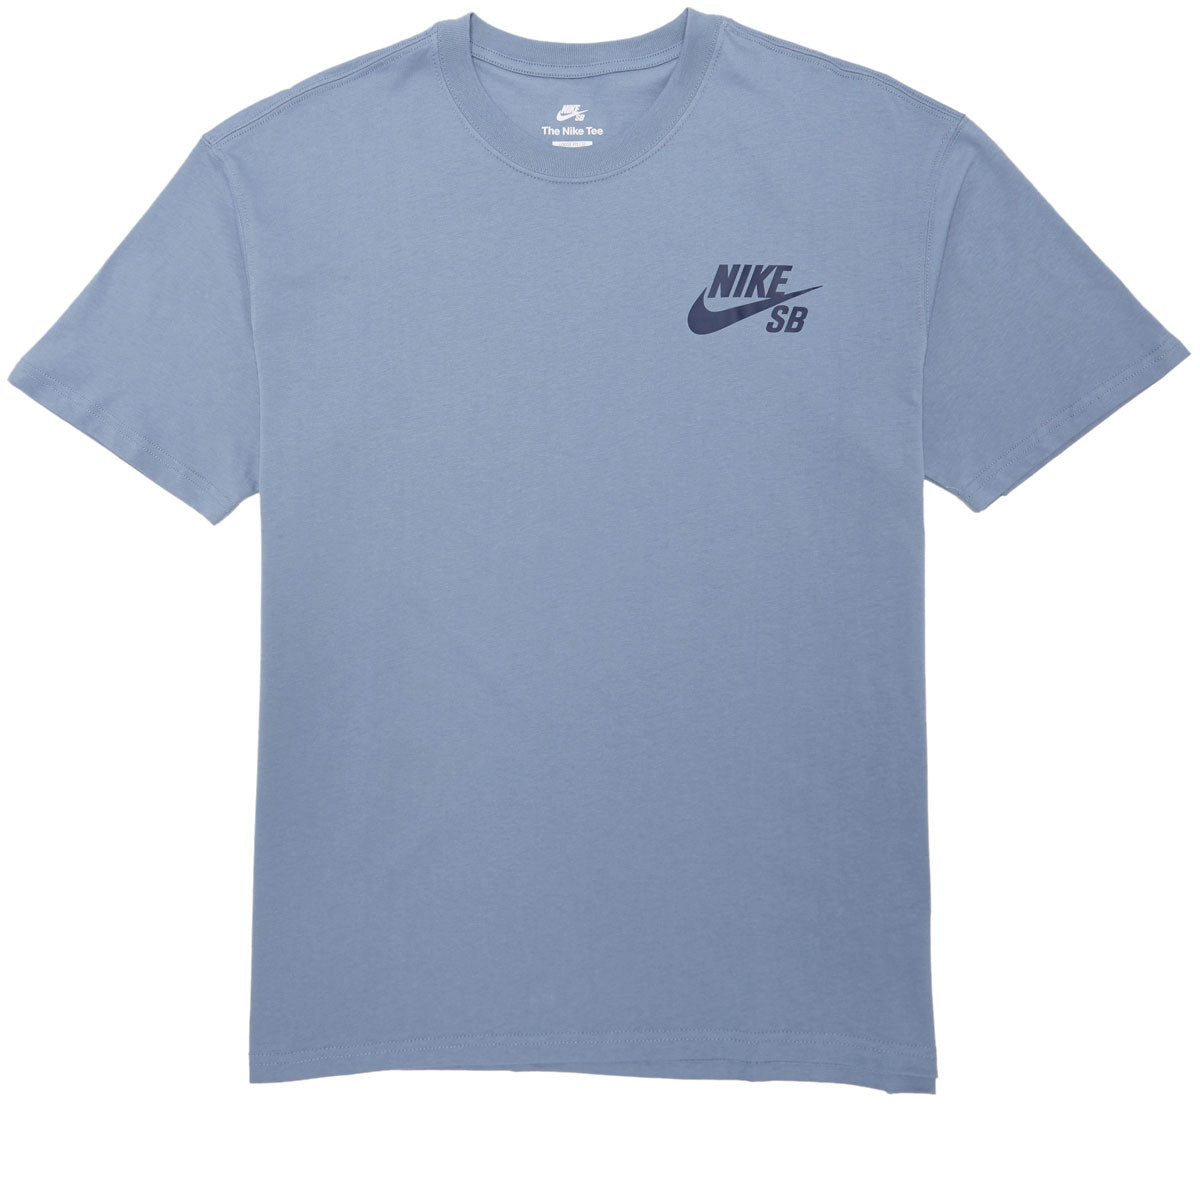 Nike SB New Logo T-Shirt - Ashen Slate image 1